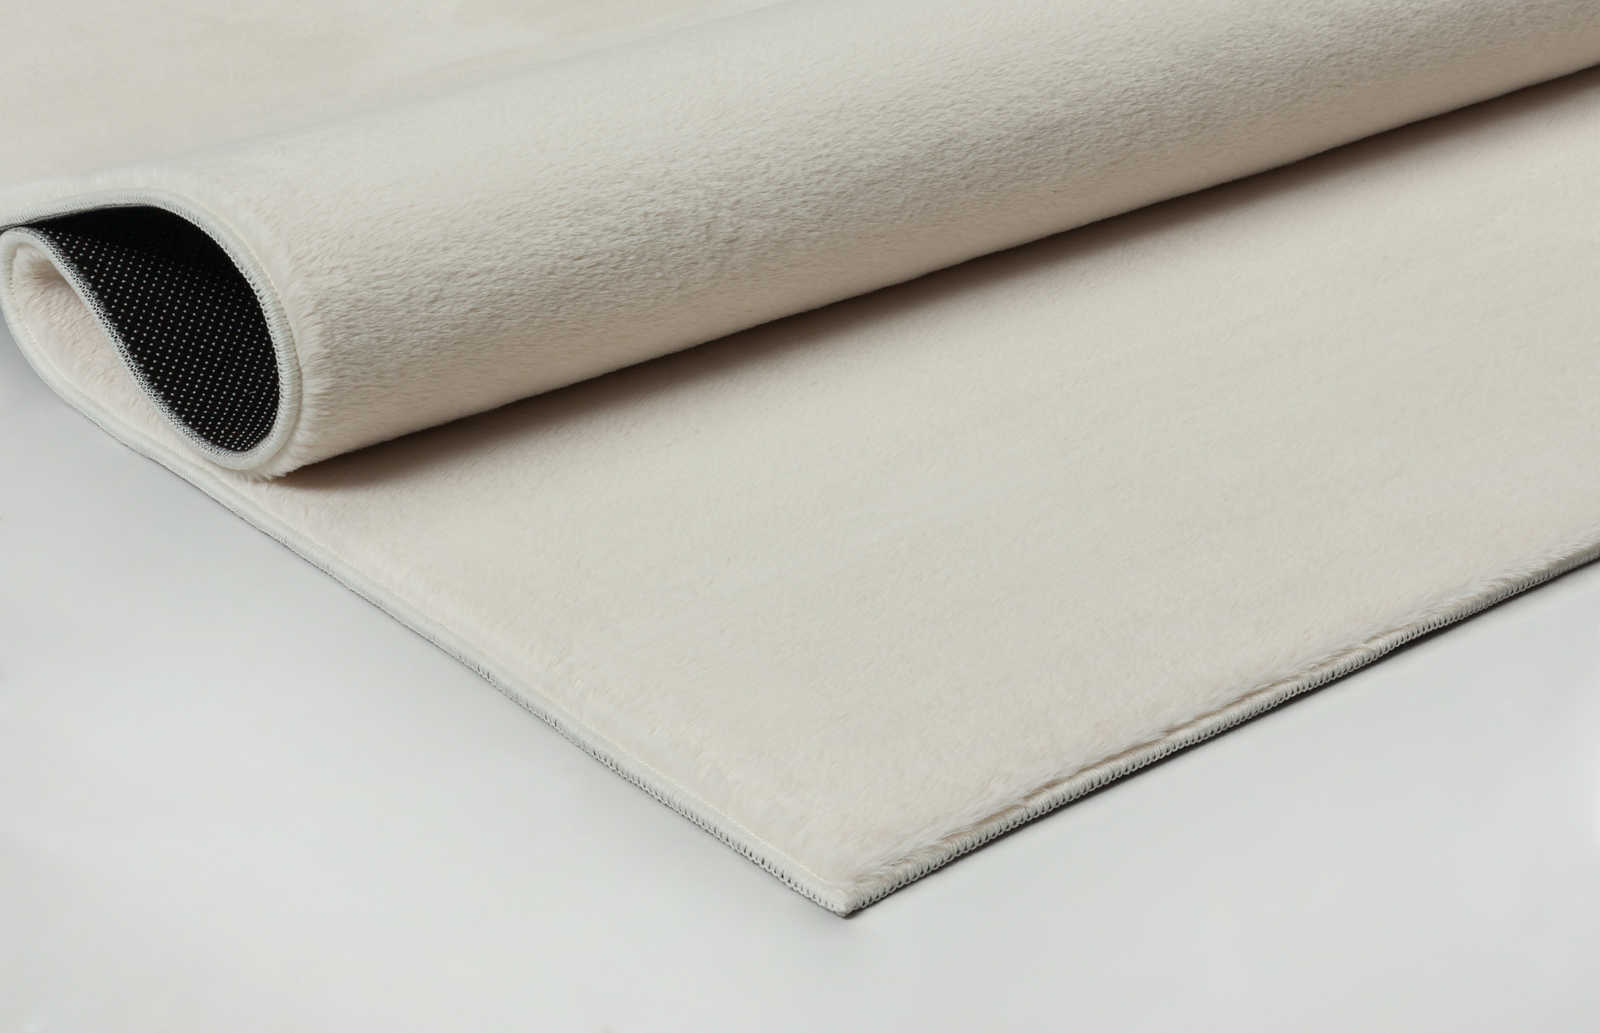             Soft high pile carpet in cream - 280 x 200 cm
        